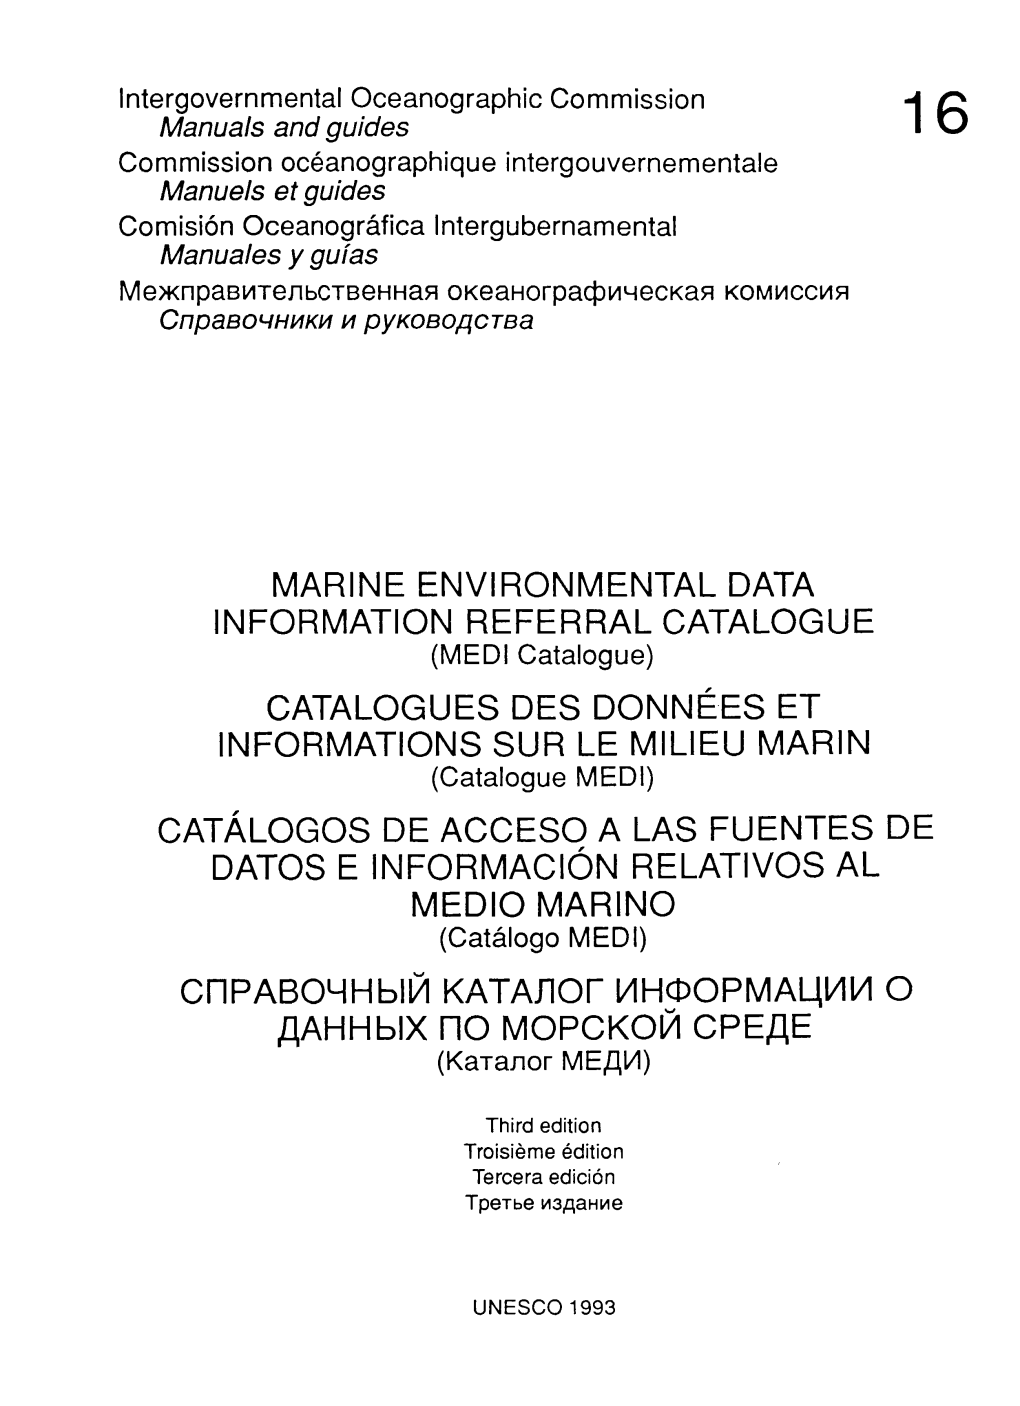 Marine Environmental Data Information Referral Catalogue